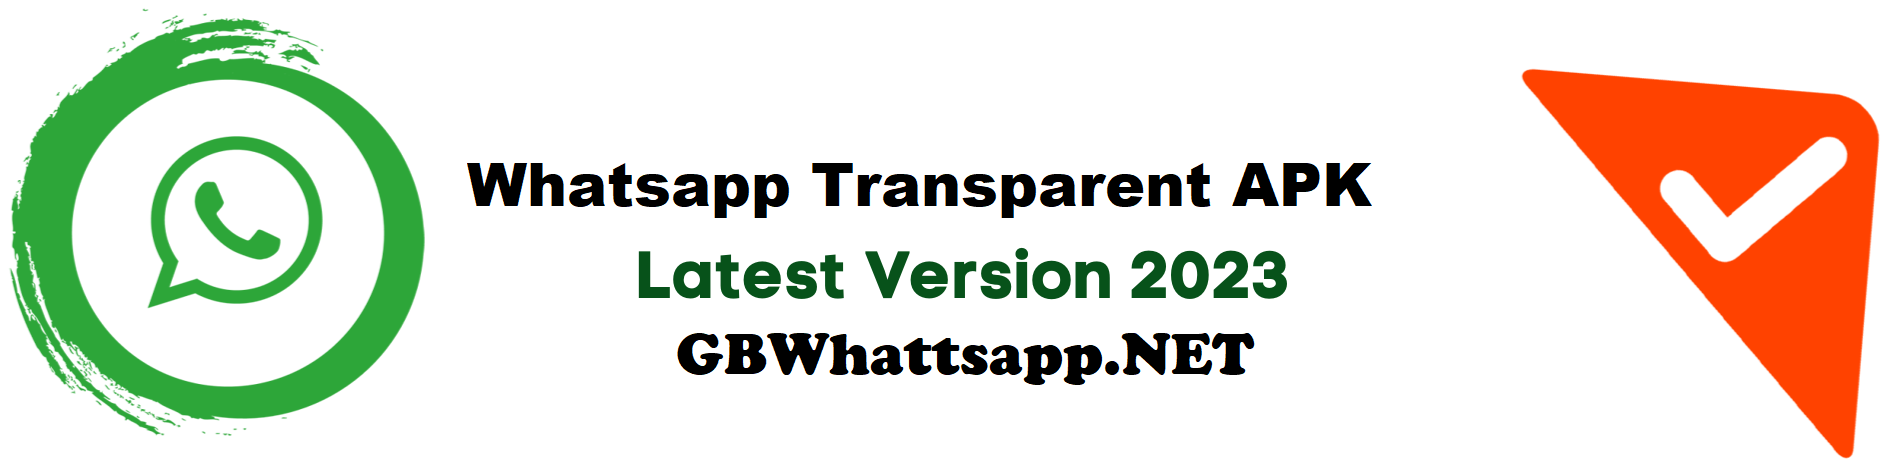 Whatsapp Transparent